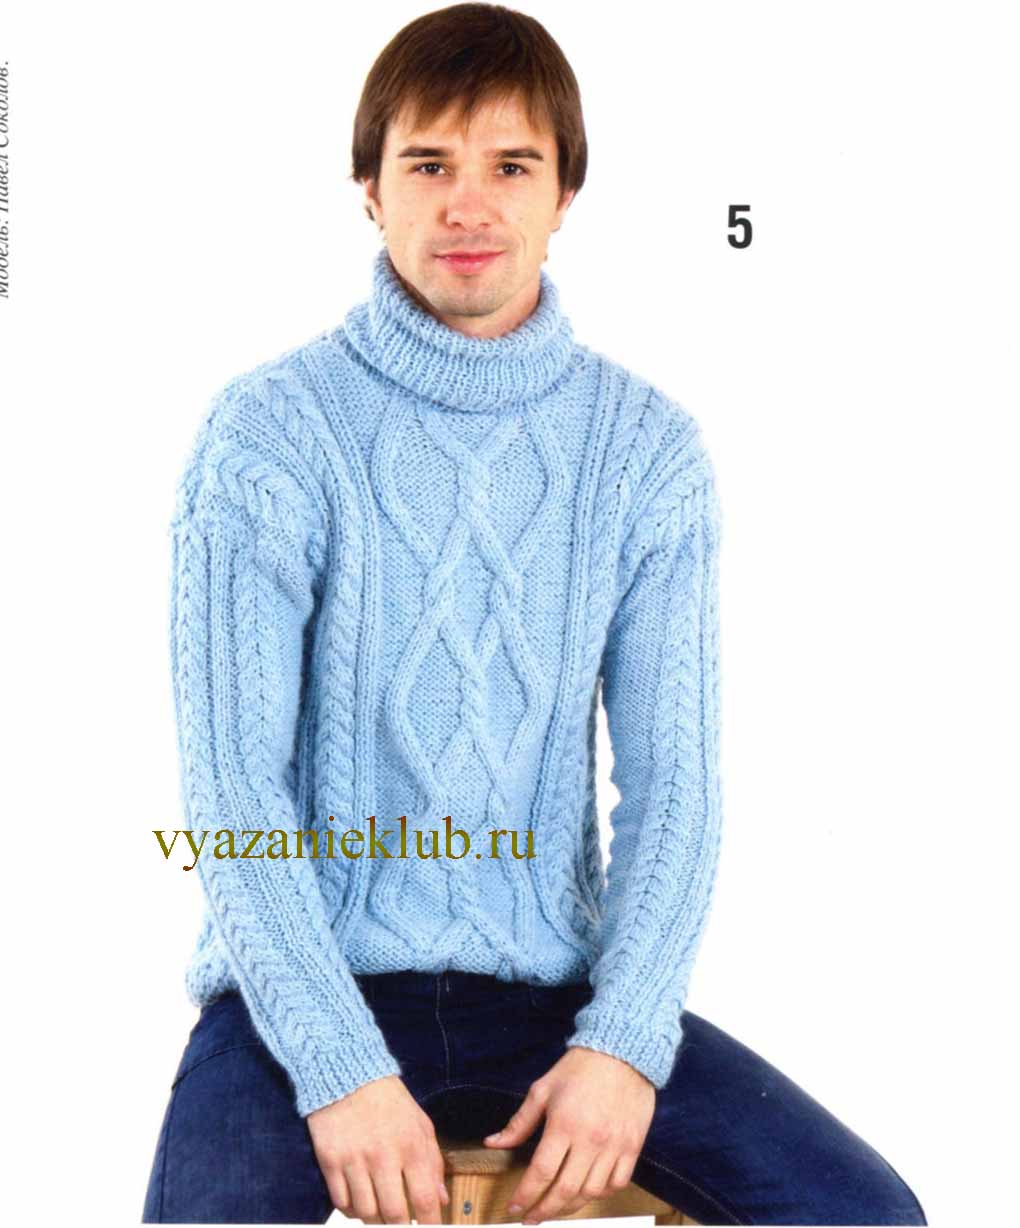 Мужской свитер с мотивом — схема вязания спицами с описанием на BurdaStyle.ru